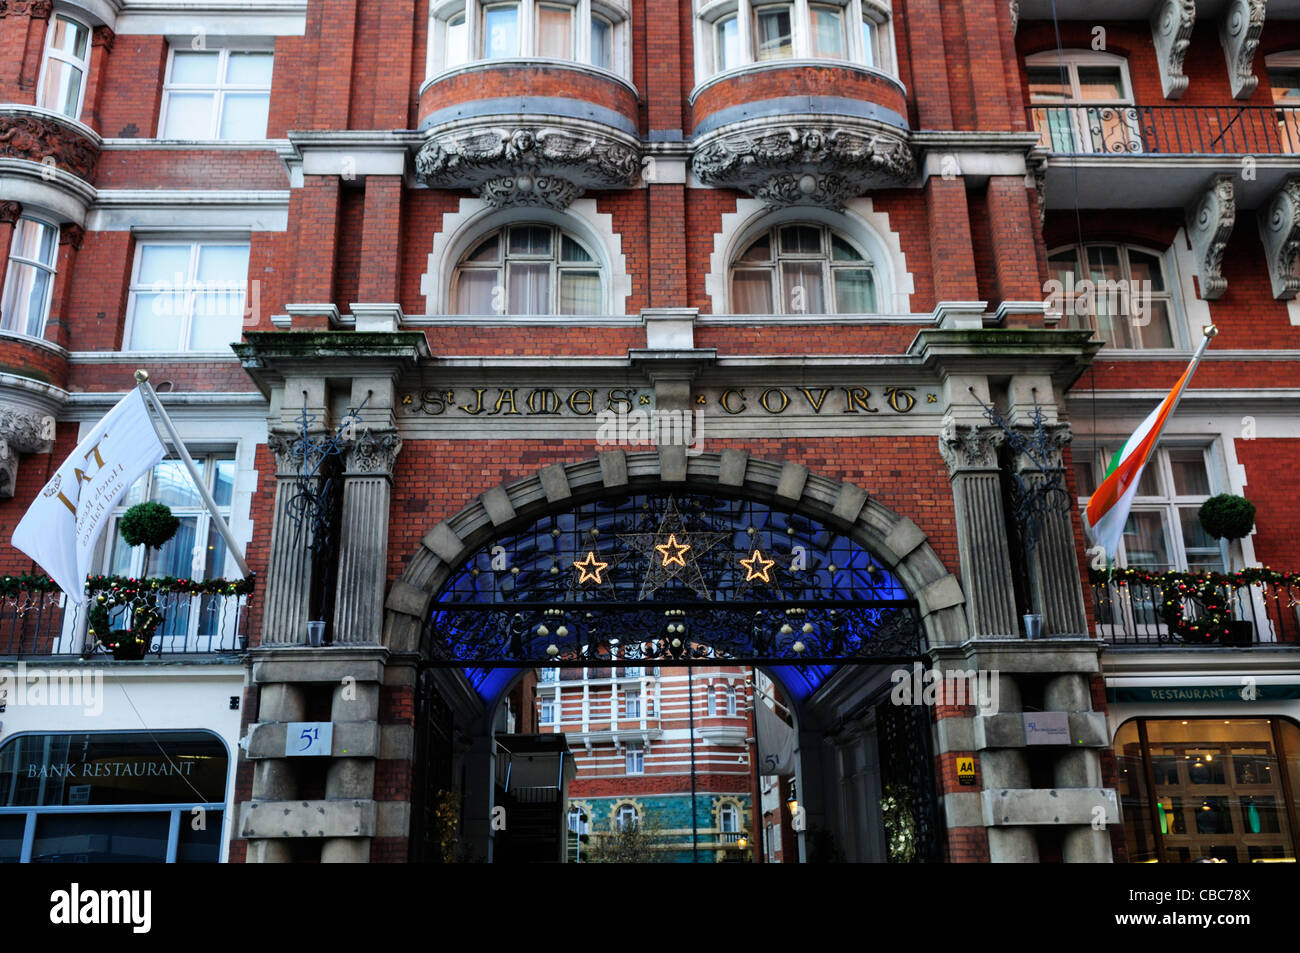 St James Court Crowne Plaza Hotel Facade, Buckingham Gate, London, England, UK Stock Photo